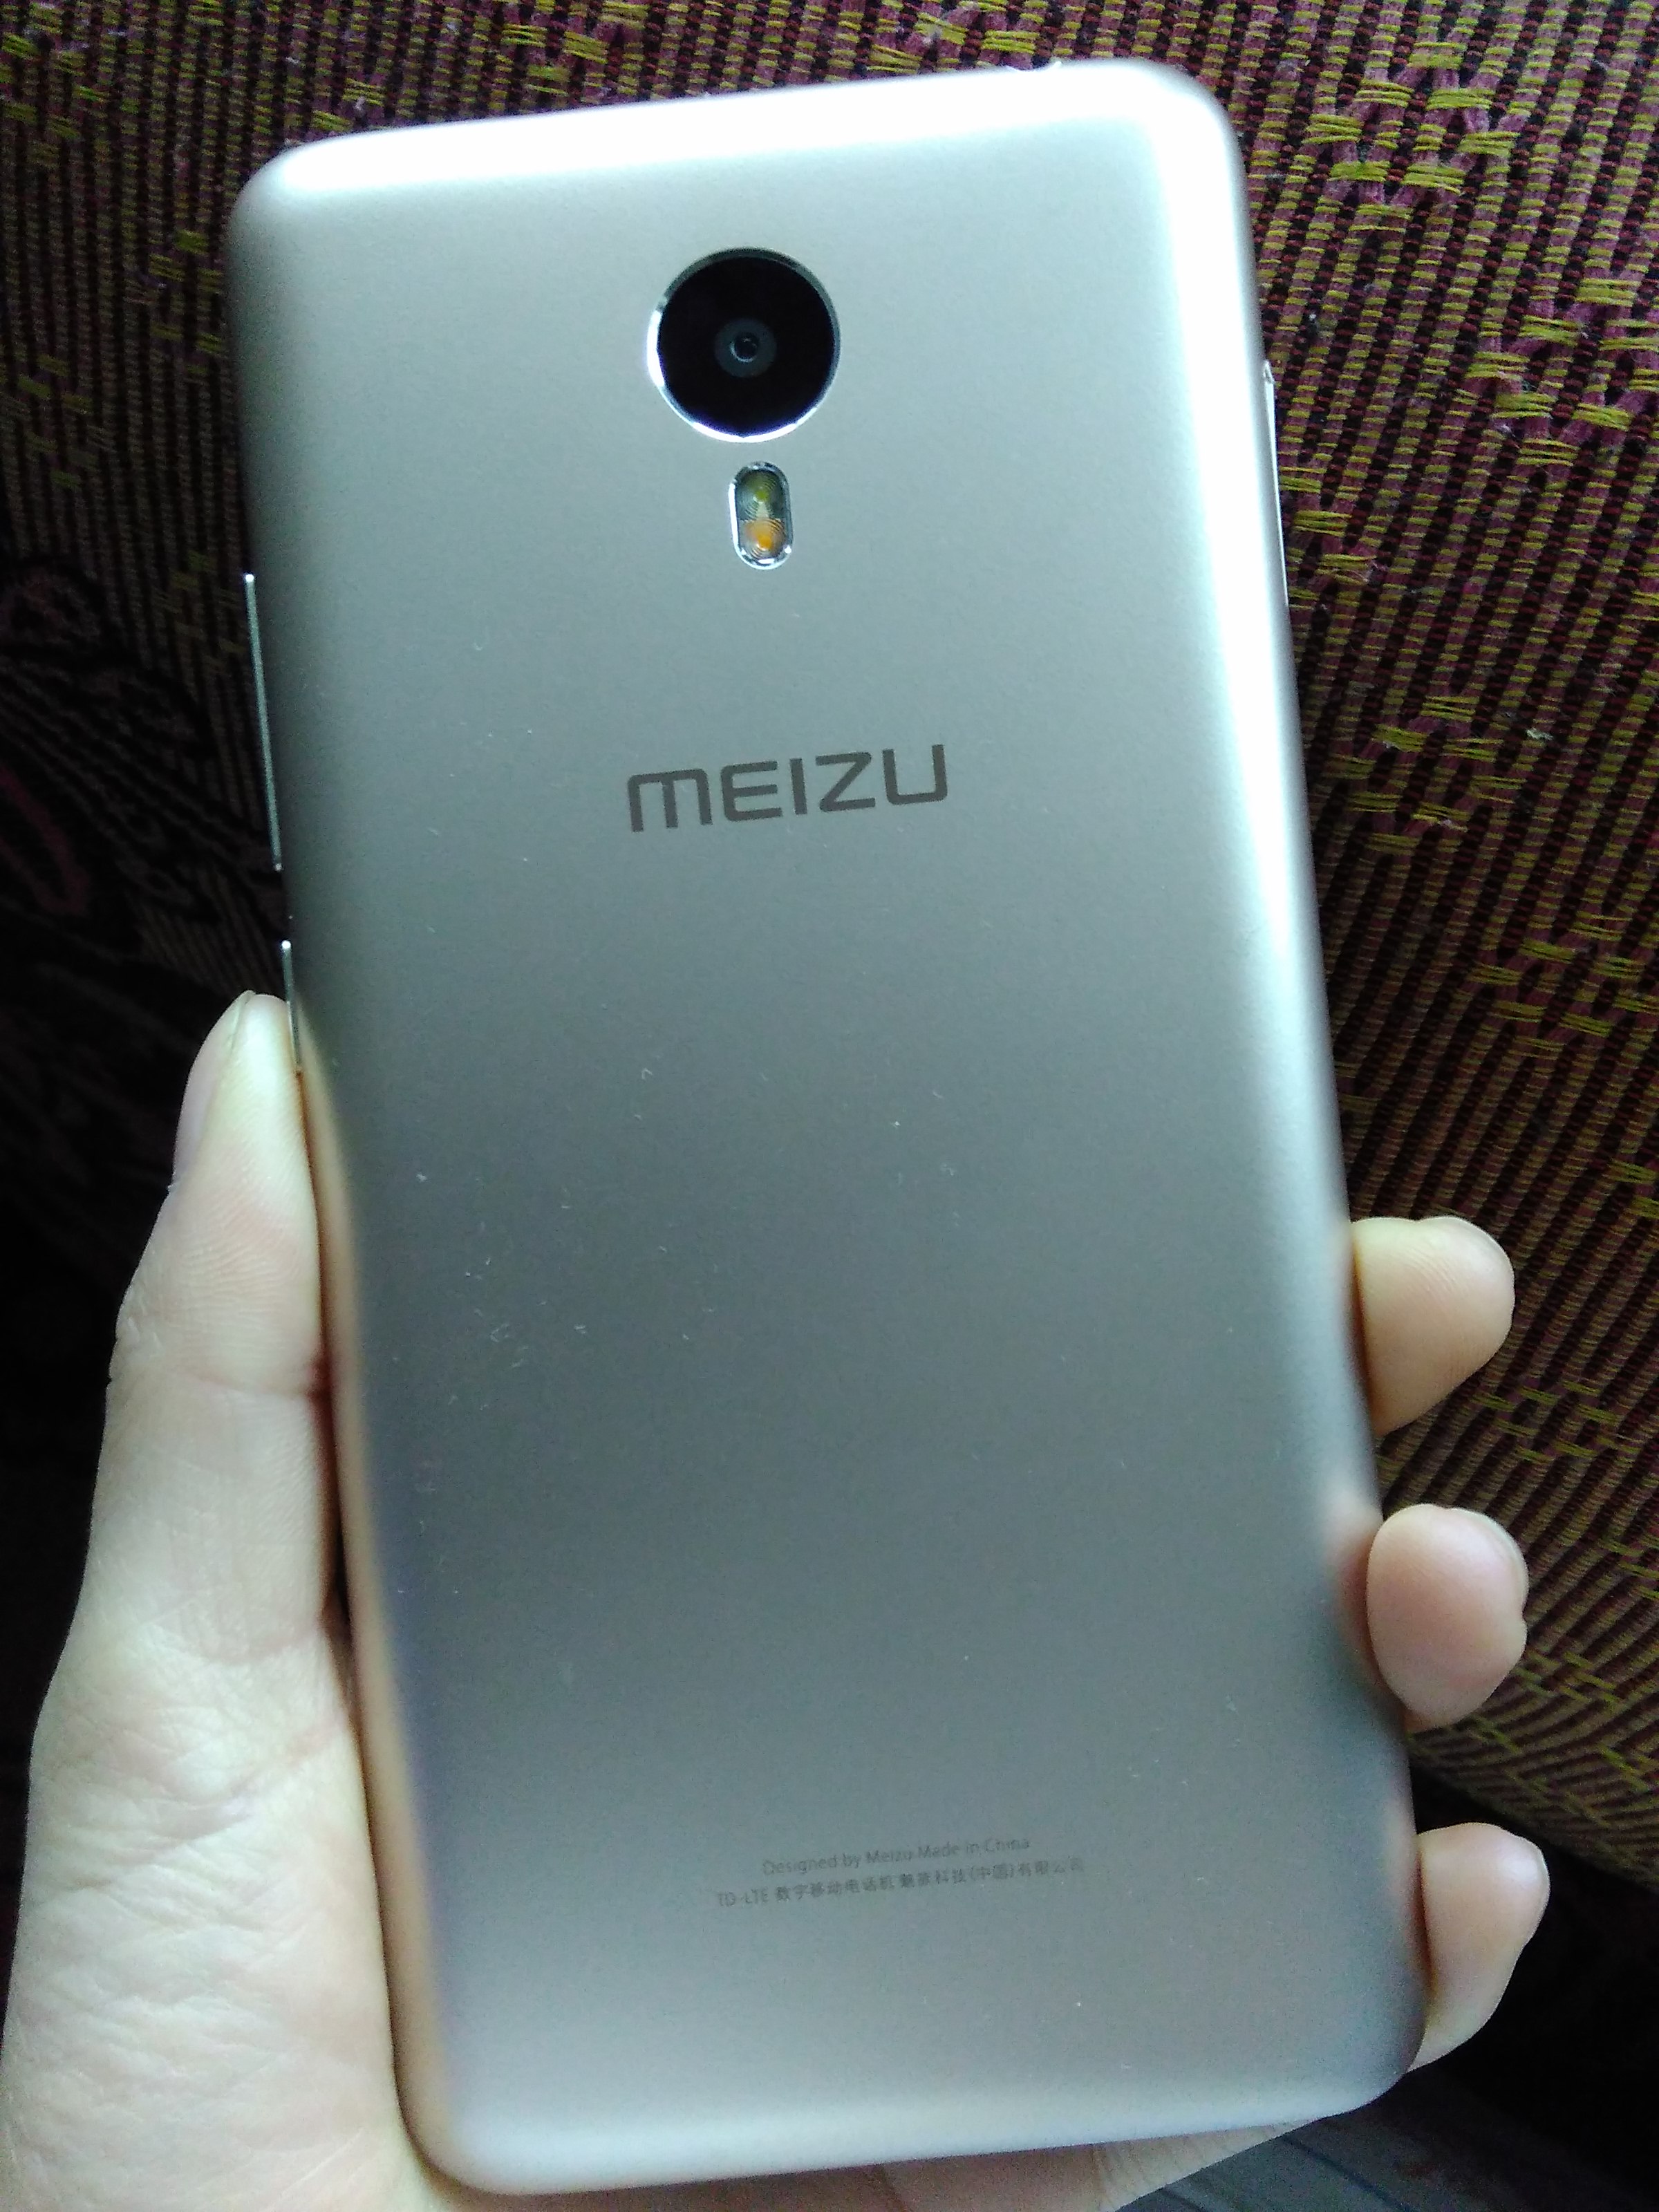 魅族发布5寸魅蓝手机，更新Connect to Meizu进展-36氪